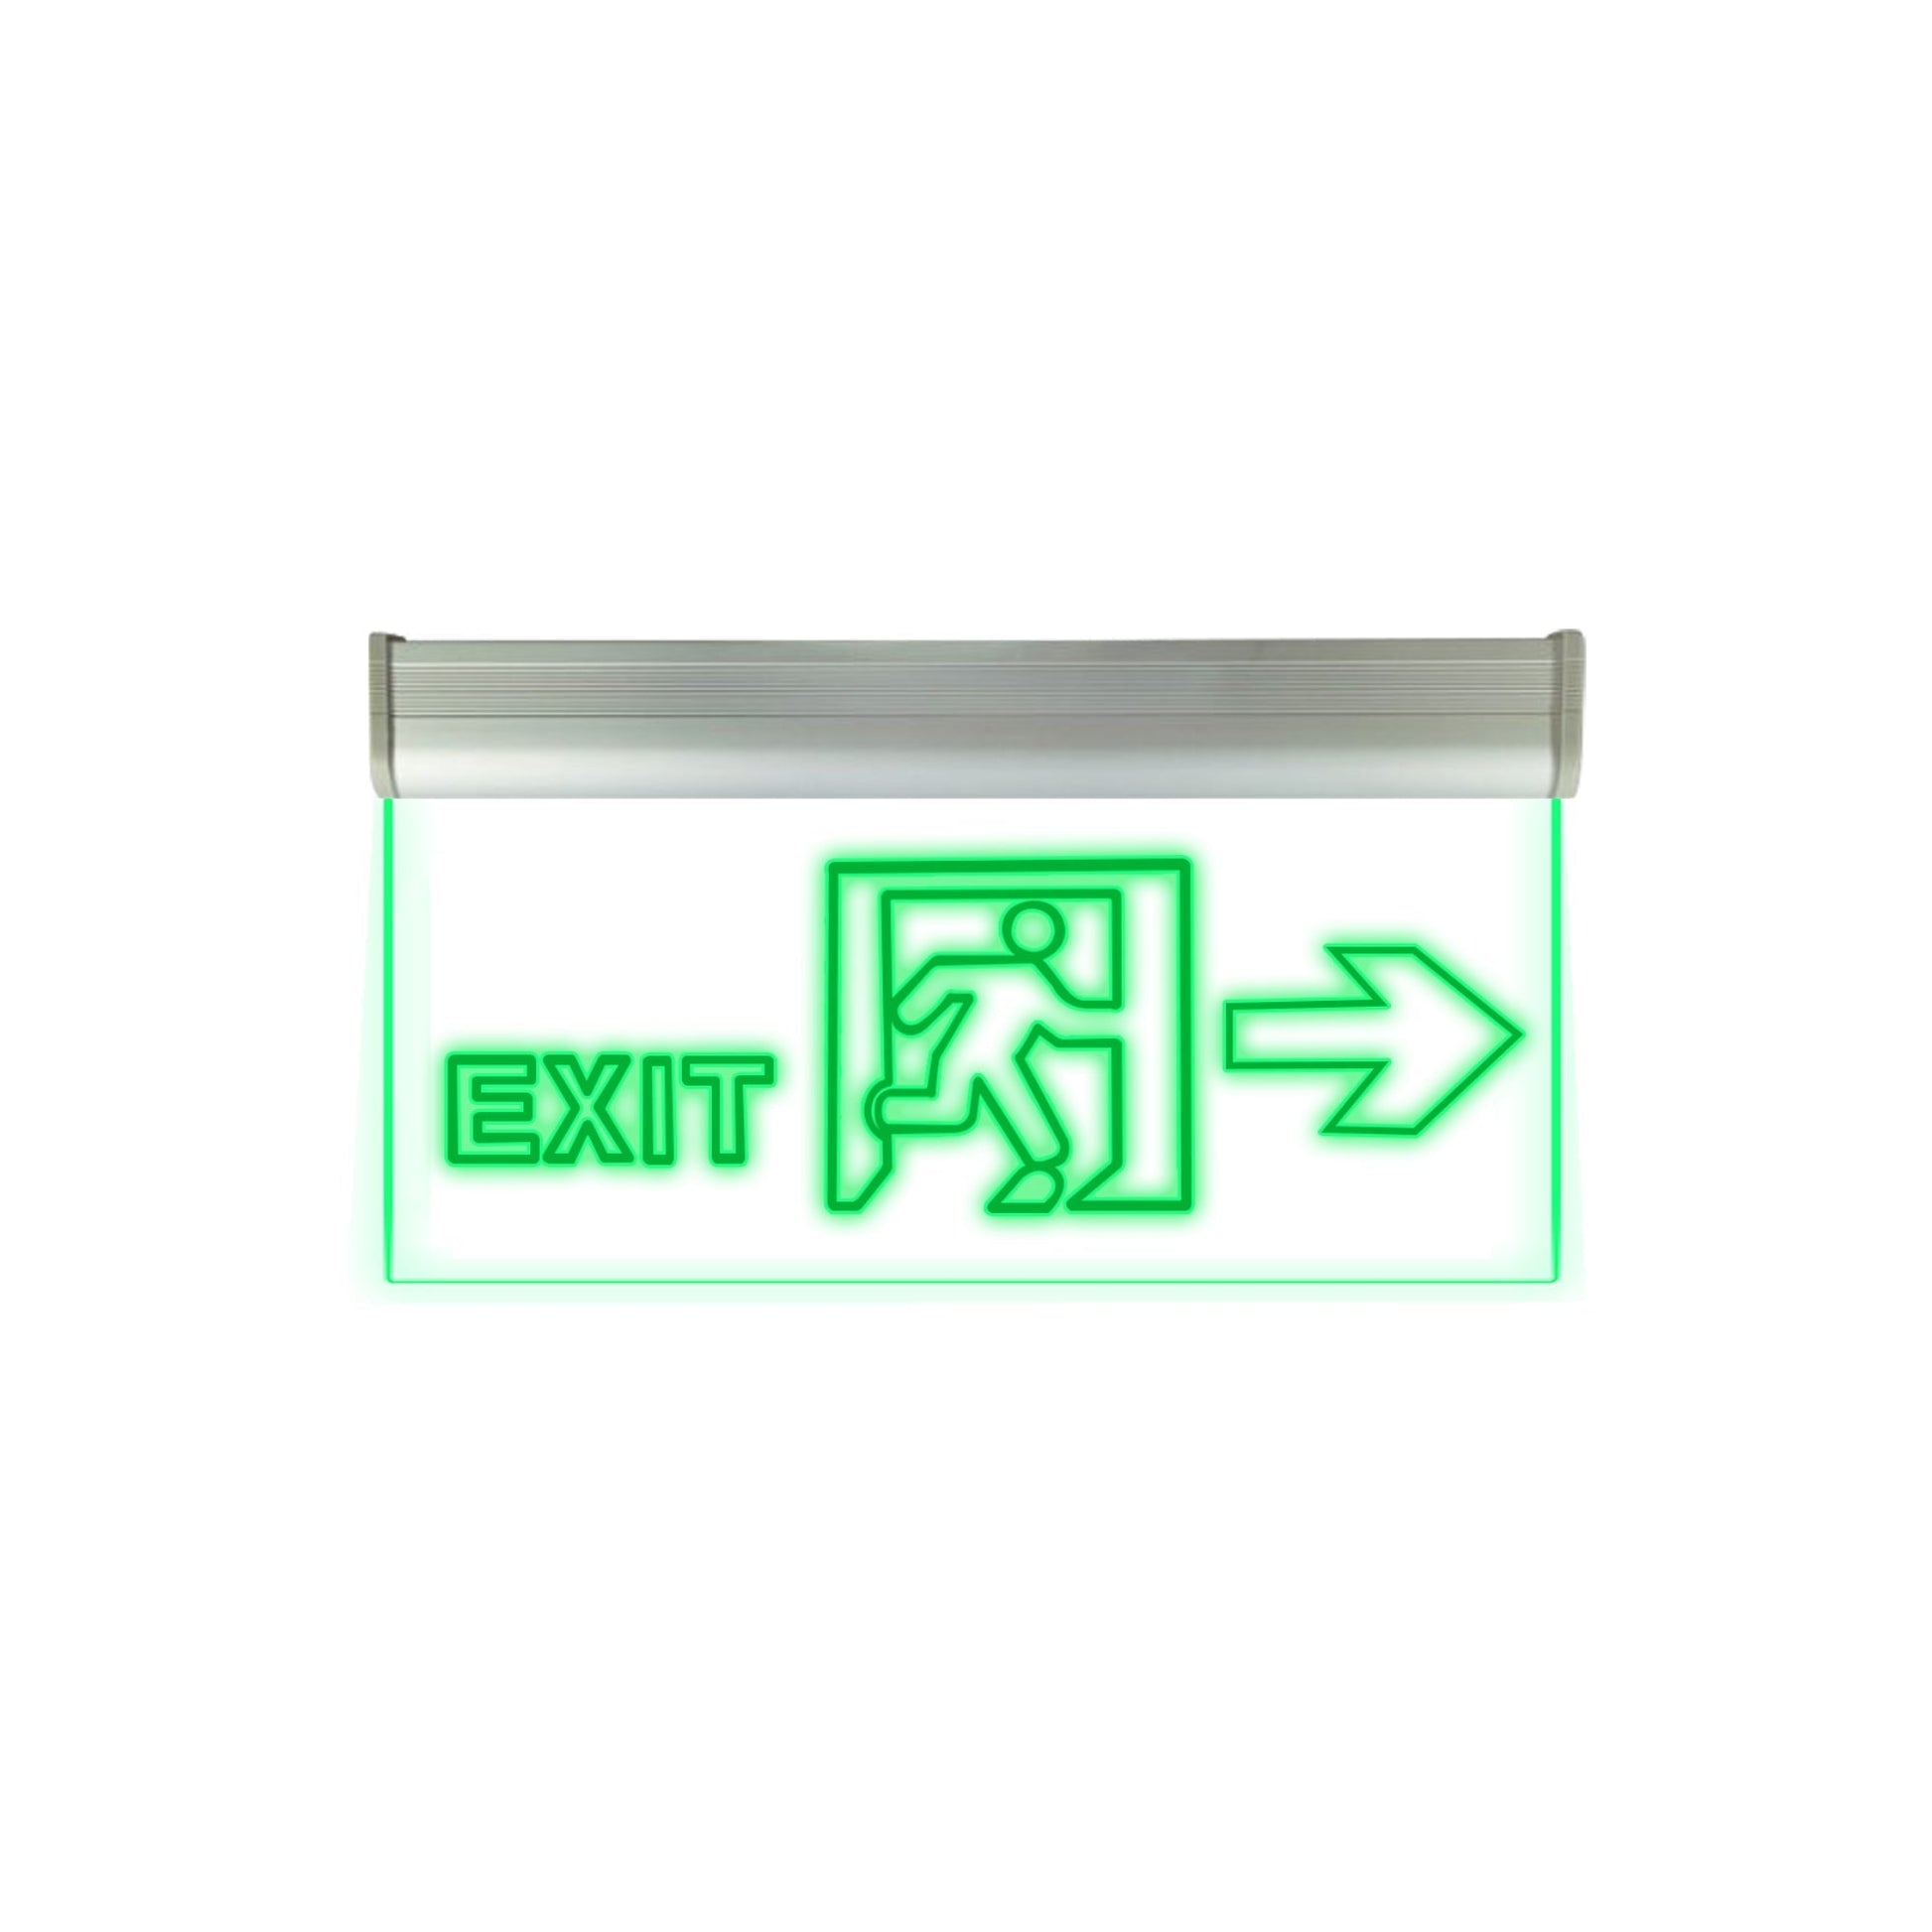 LED Exit Light Clear Acrylic Man with Arrow Single Face Ecoshift Shopify